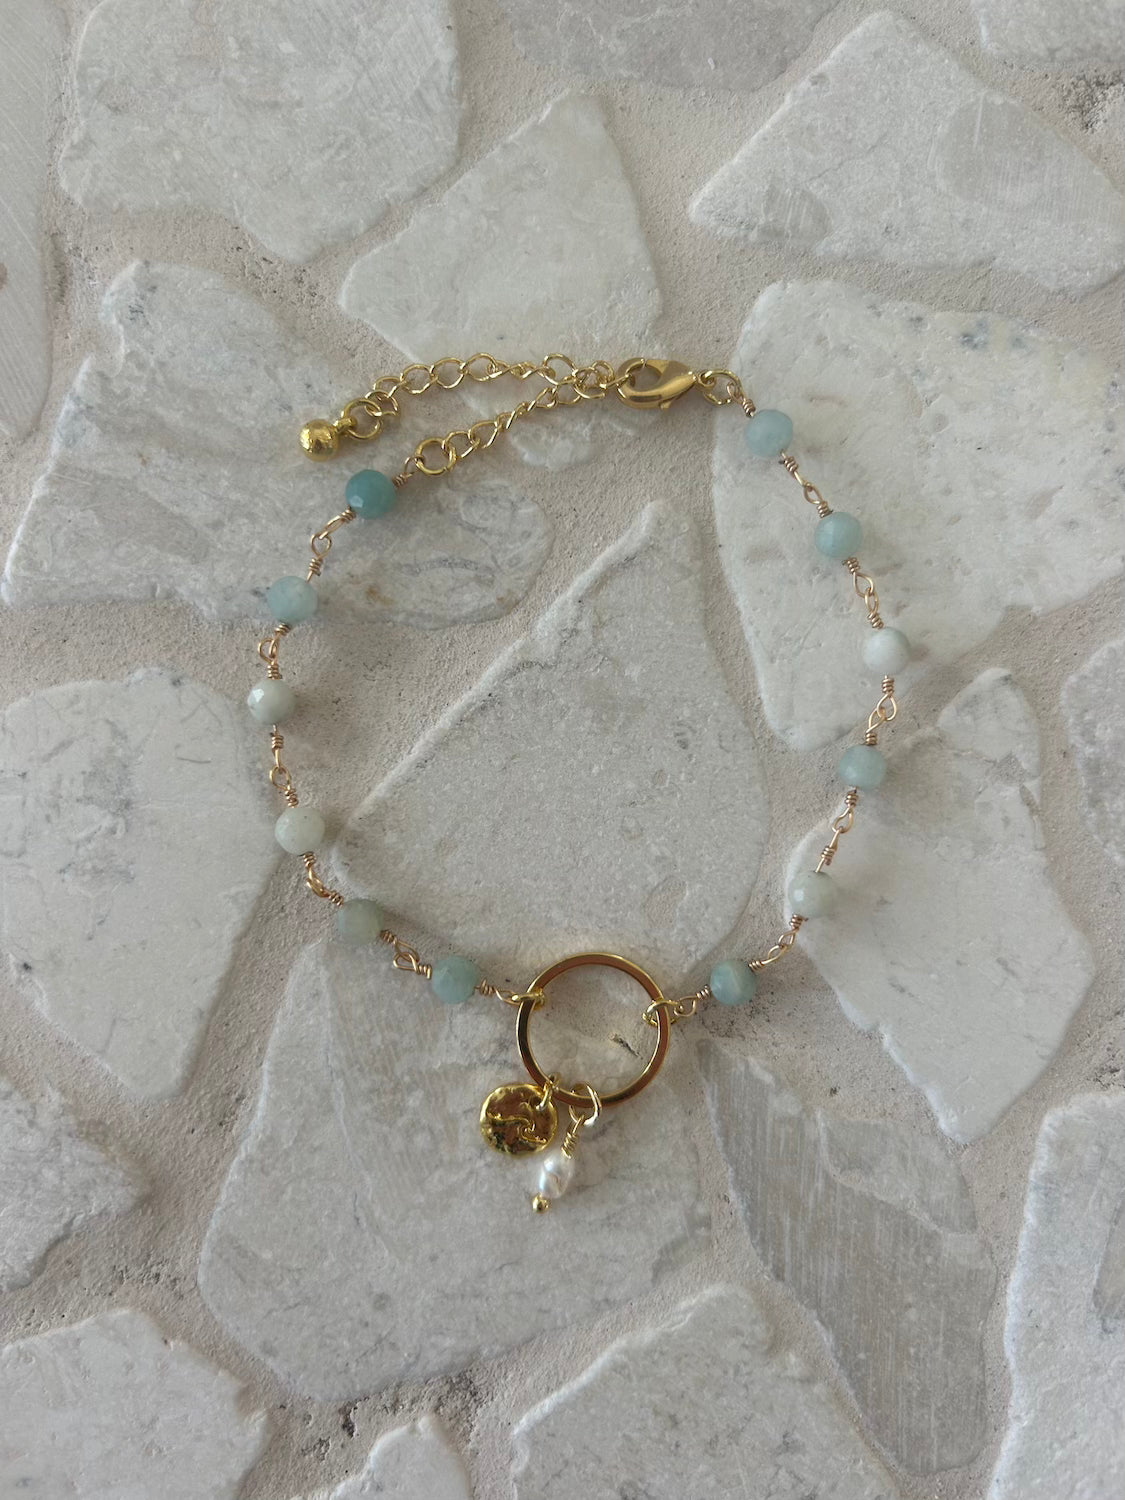 Malia Jewellery - Chasing Waves bracelet - Cutting stone and 18k gold chain links